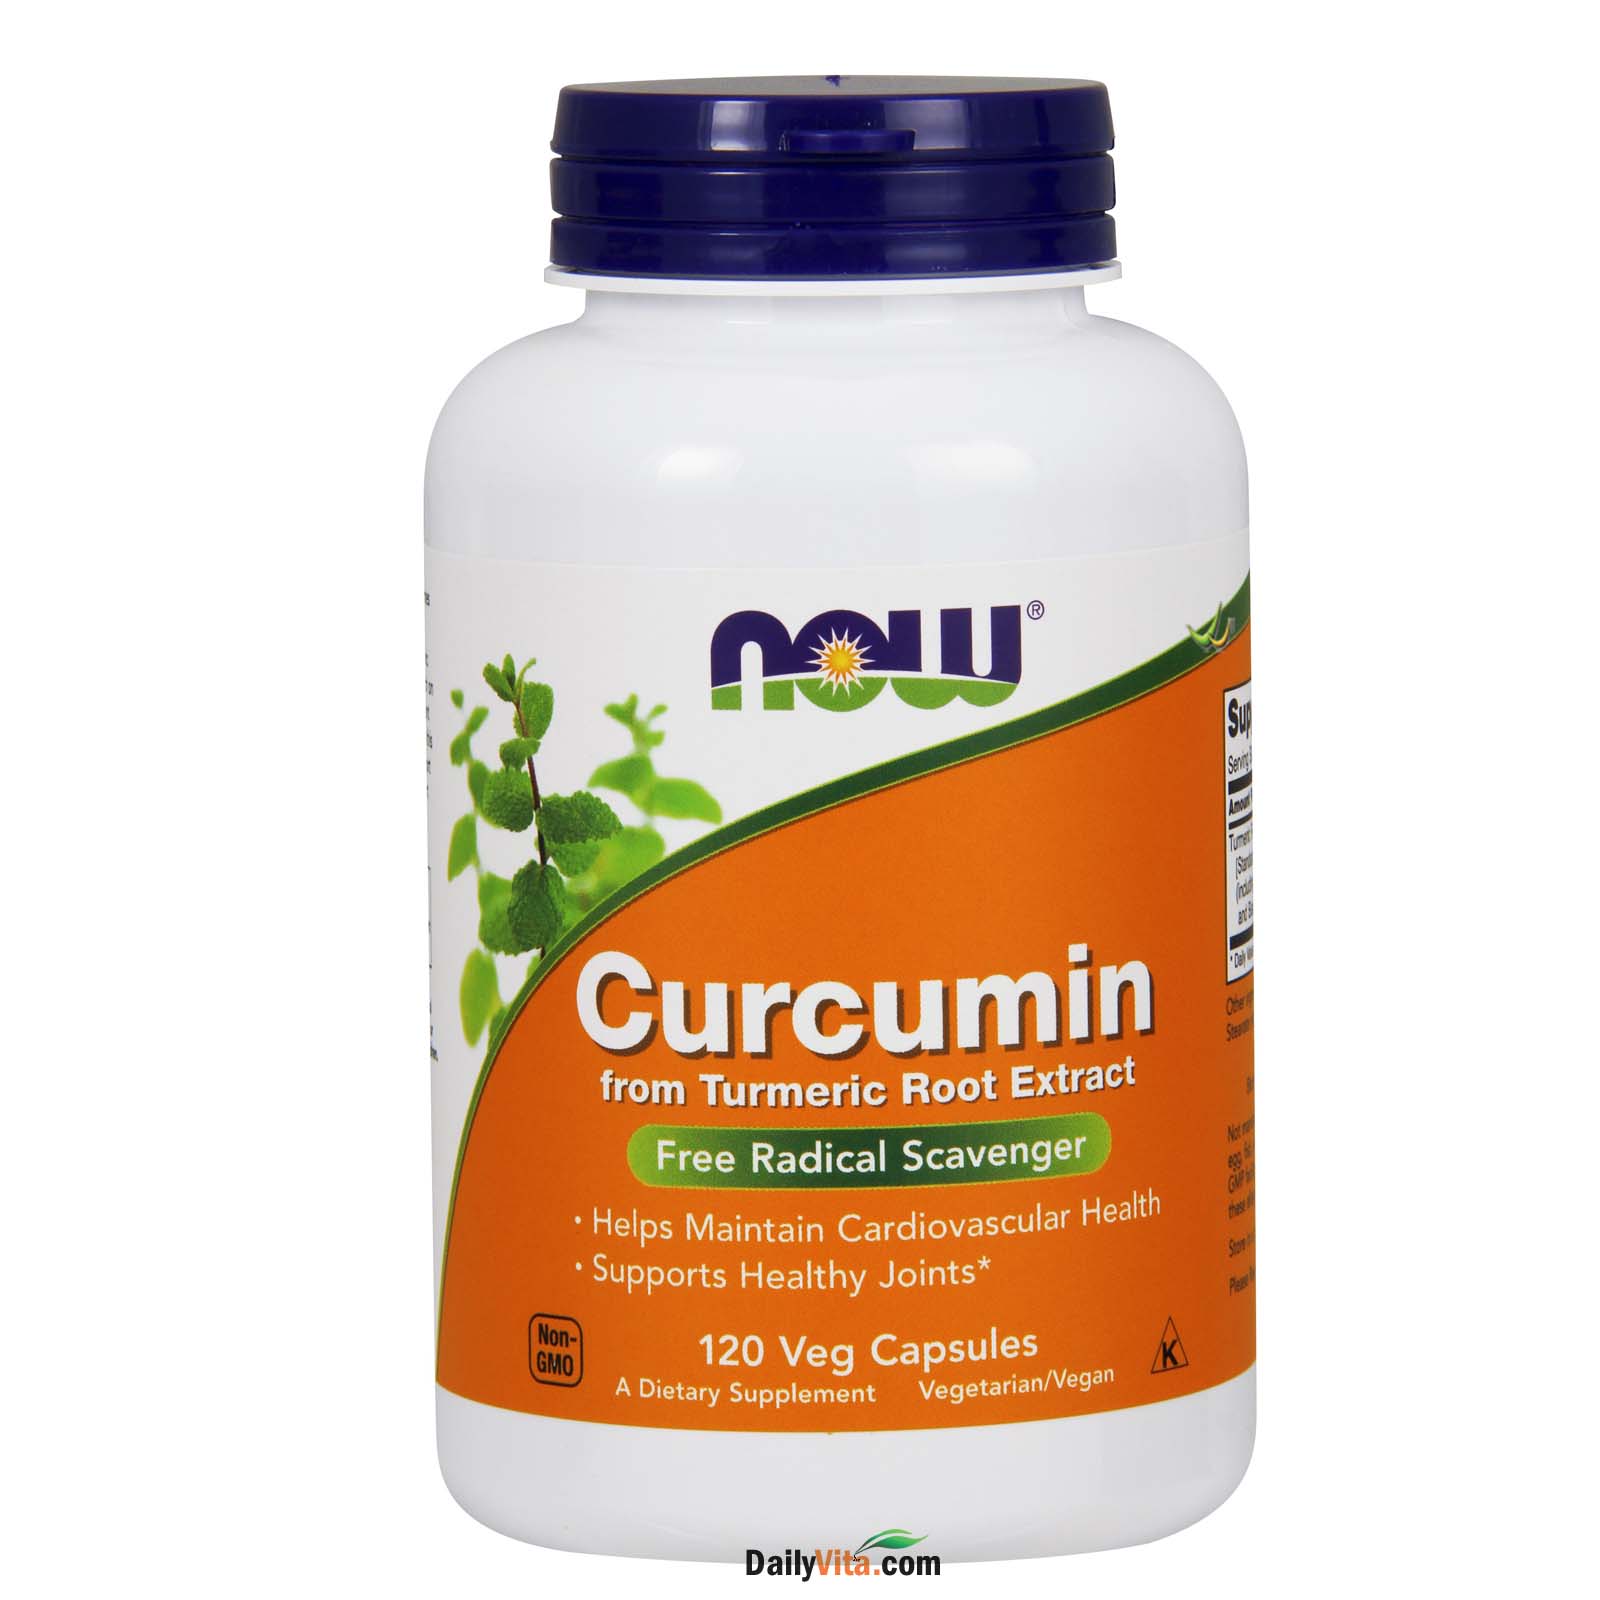 NOW® Curcumin - 120 Veg Capsules